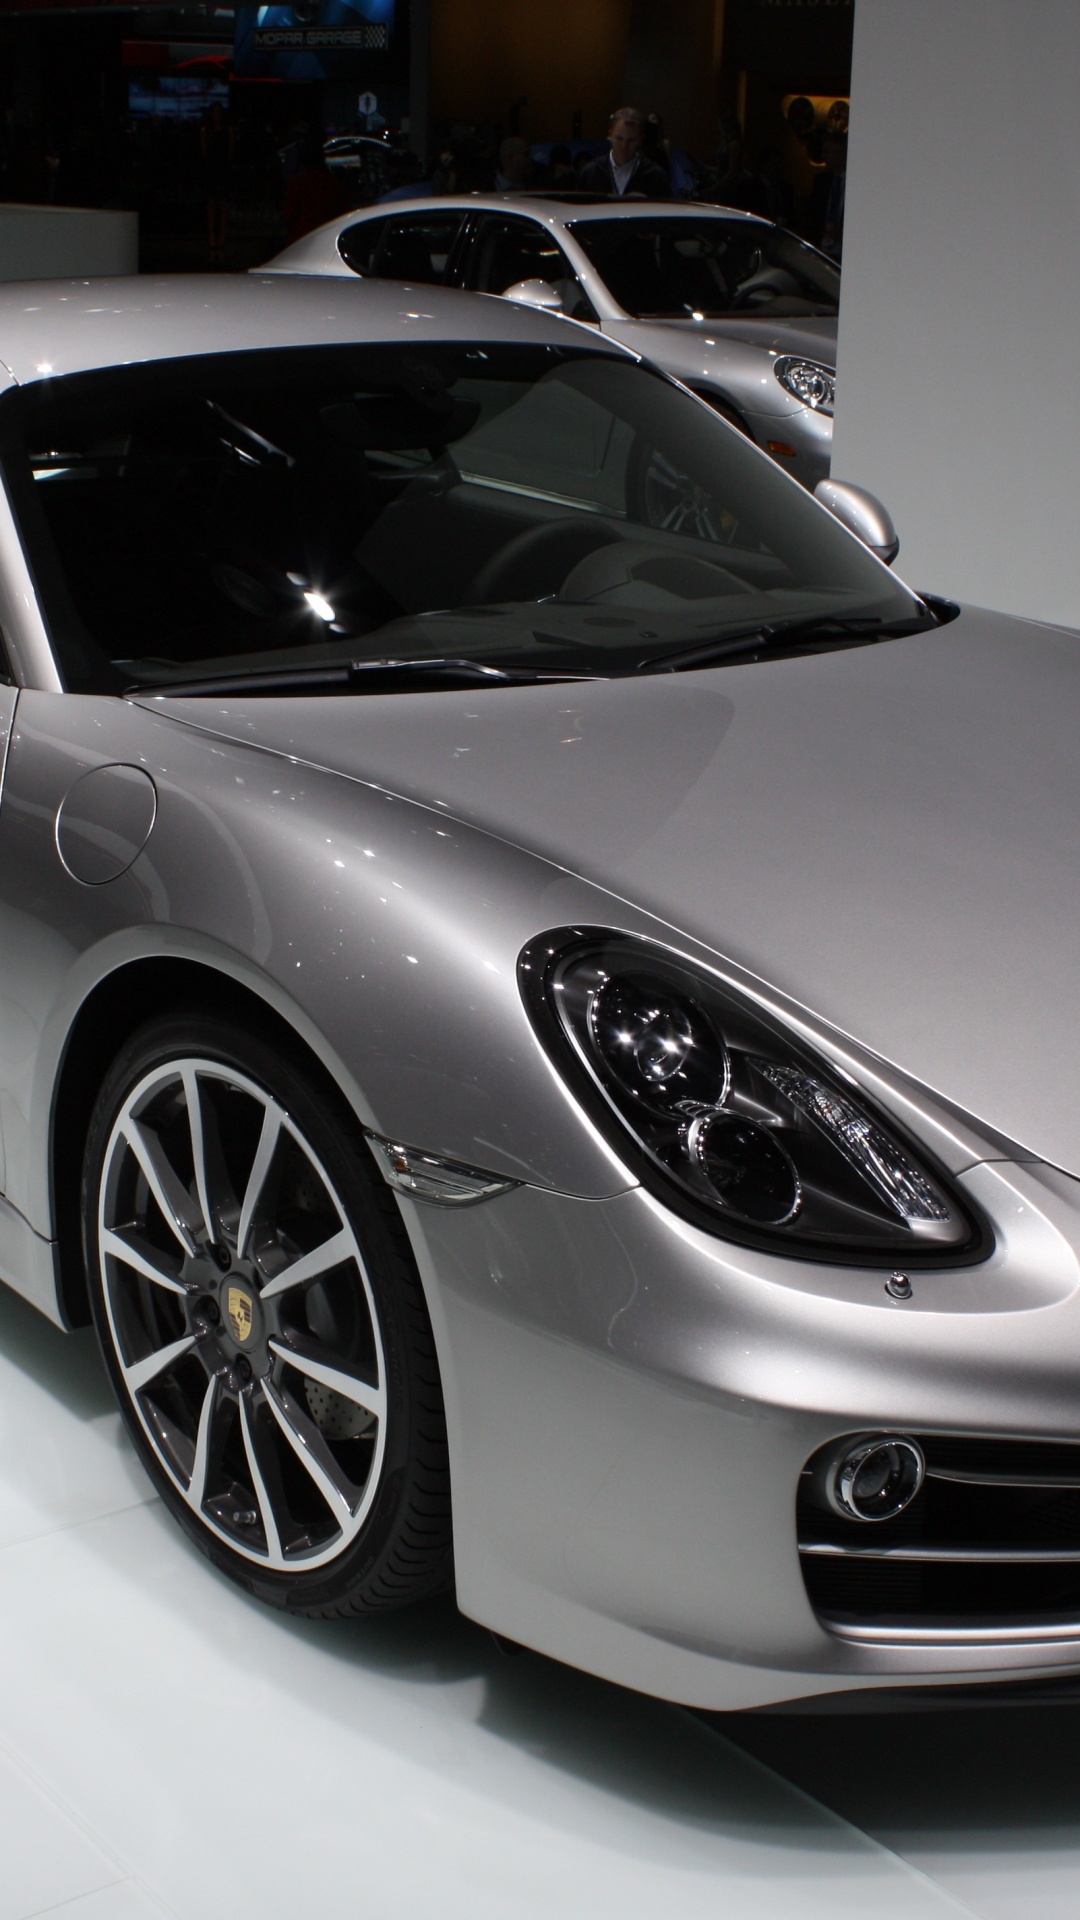 Silver Porsche 911 Parked in a Room. Wallpaper in 1080x1920 Resolution